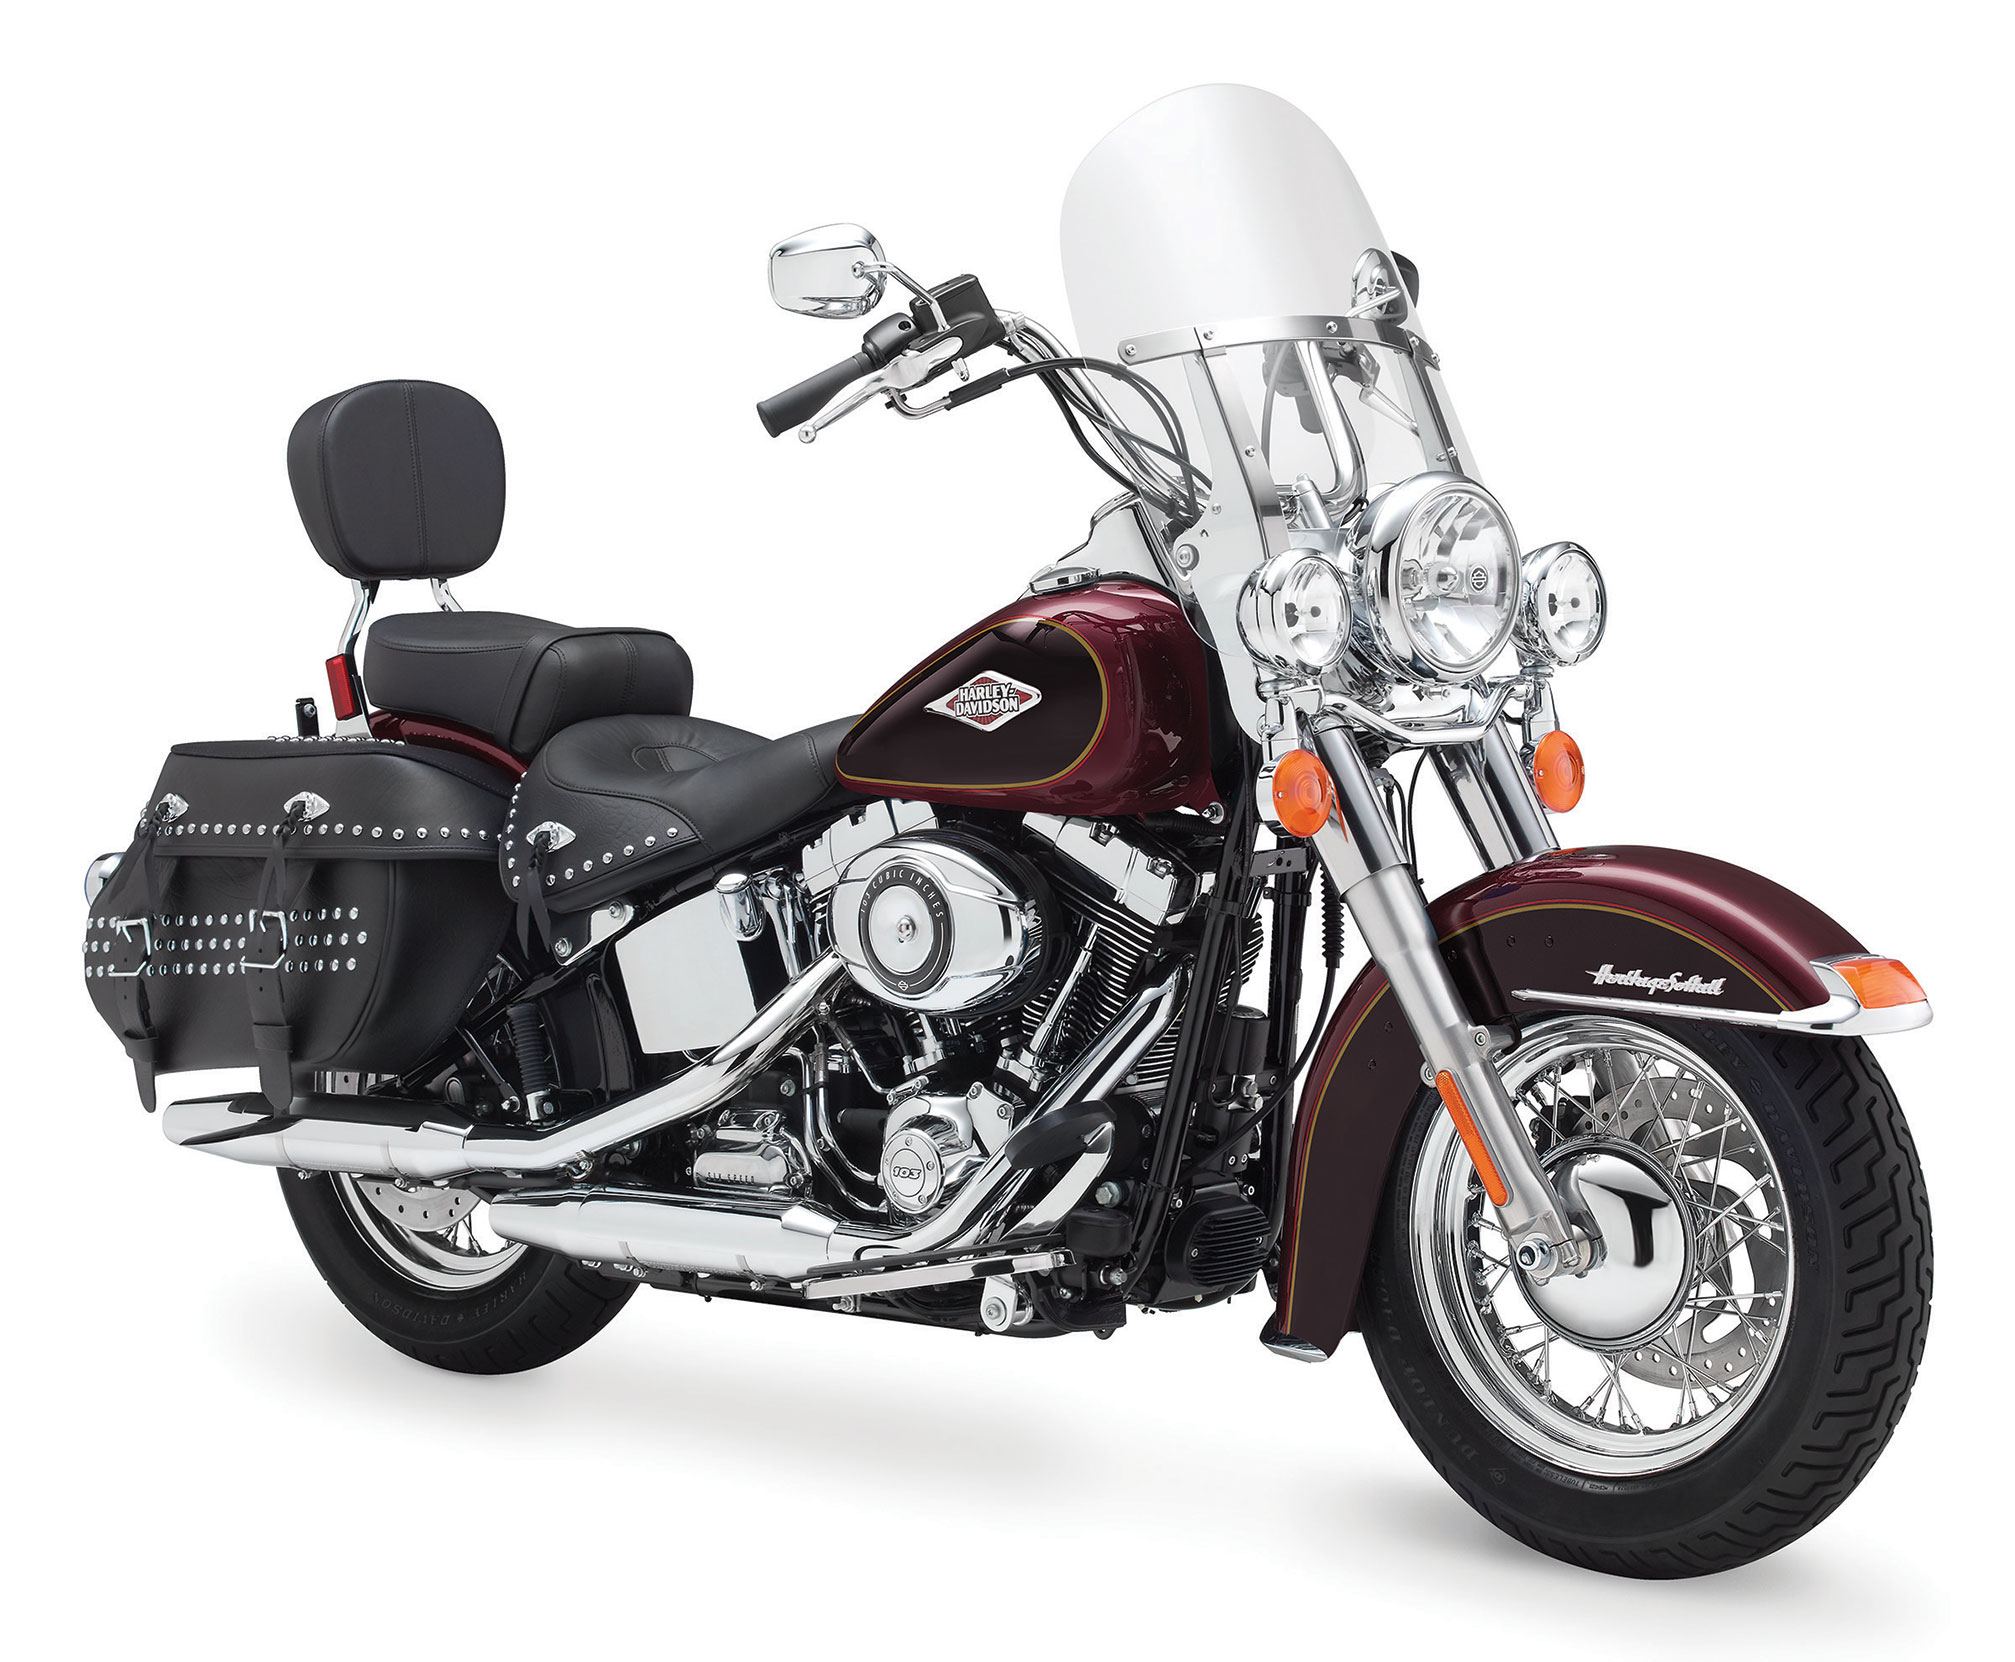 2015 Harley Davidson Flstc Heritage Softail Classic Review